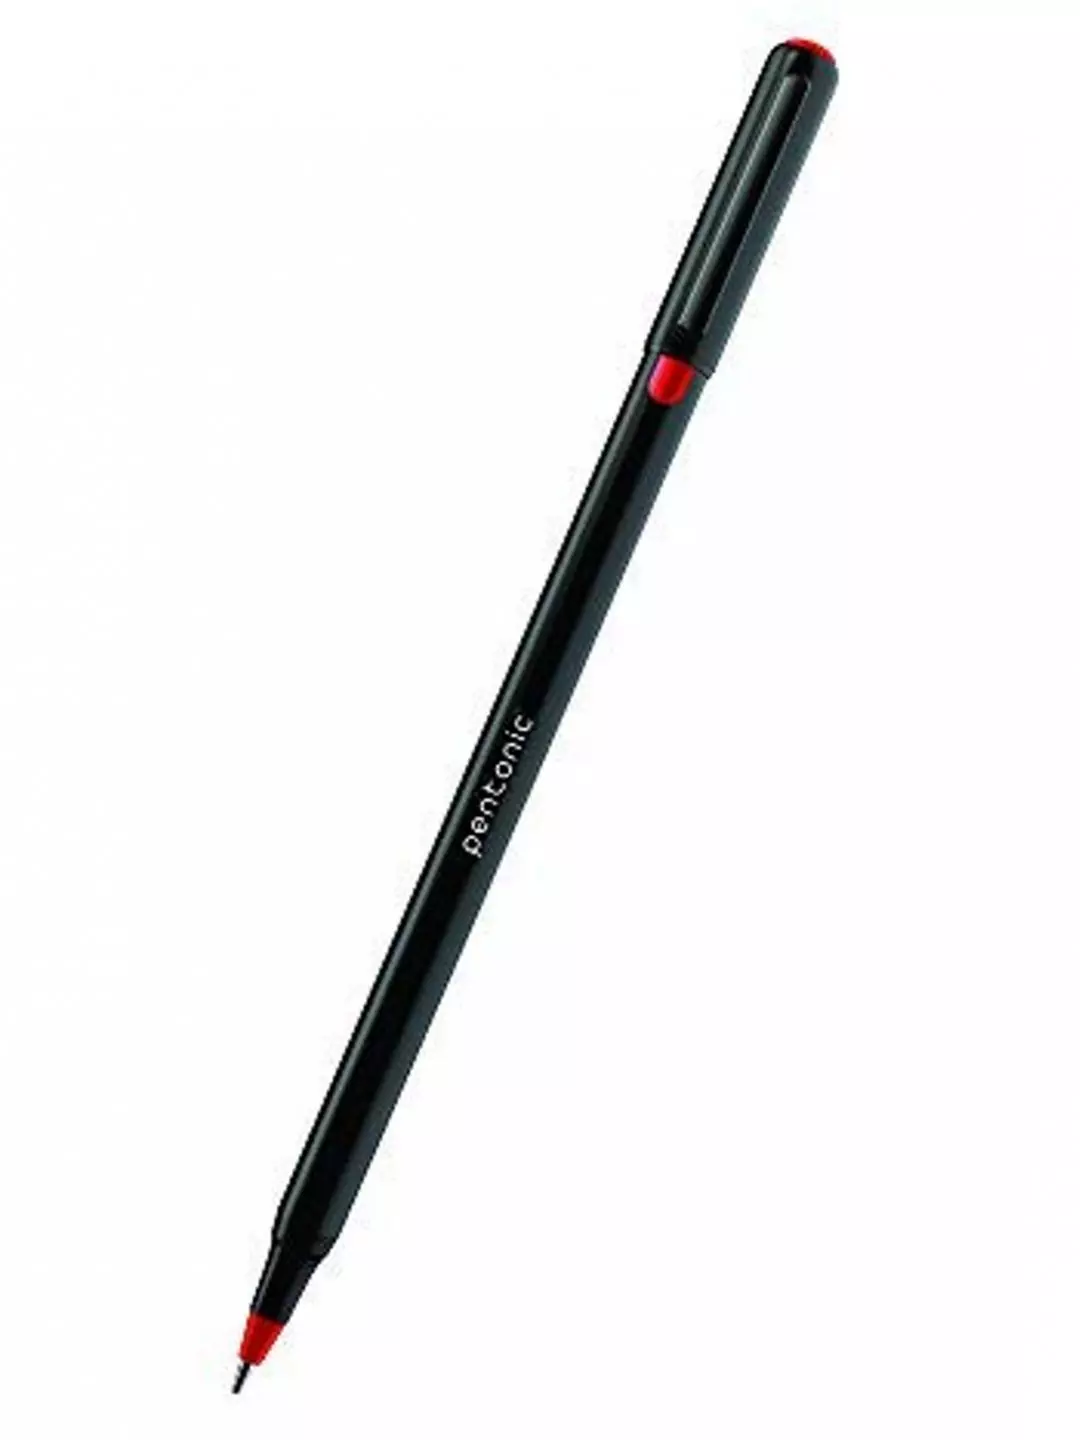 Linc Pentonic Multi Colour Ball Point Pen 0.7 mm  Pack of 10 Pen